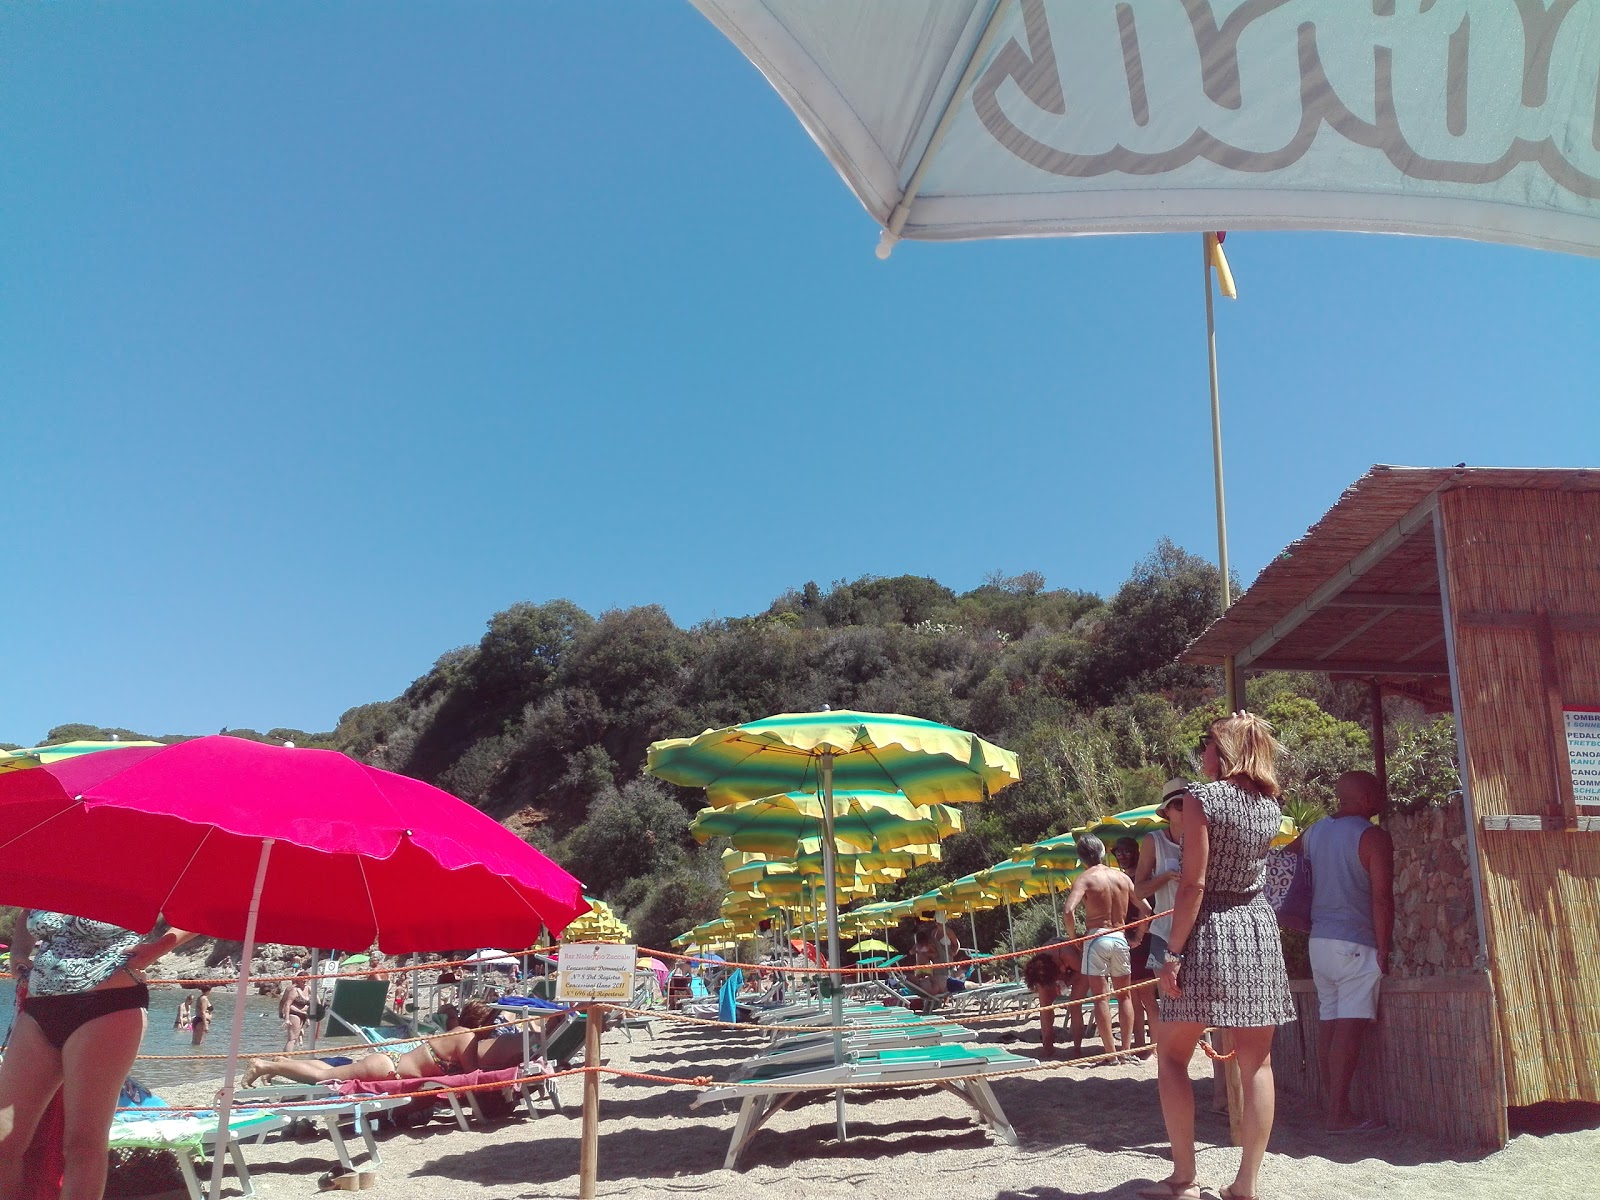 Spiaggia Di Zuccale'in fotoğrafı ve güzel manzarası